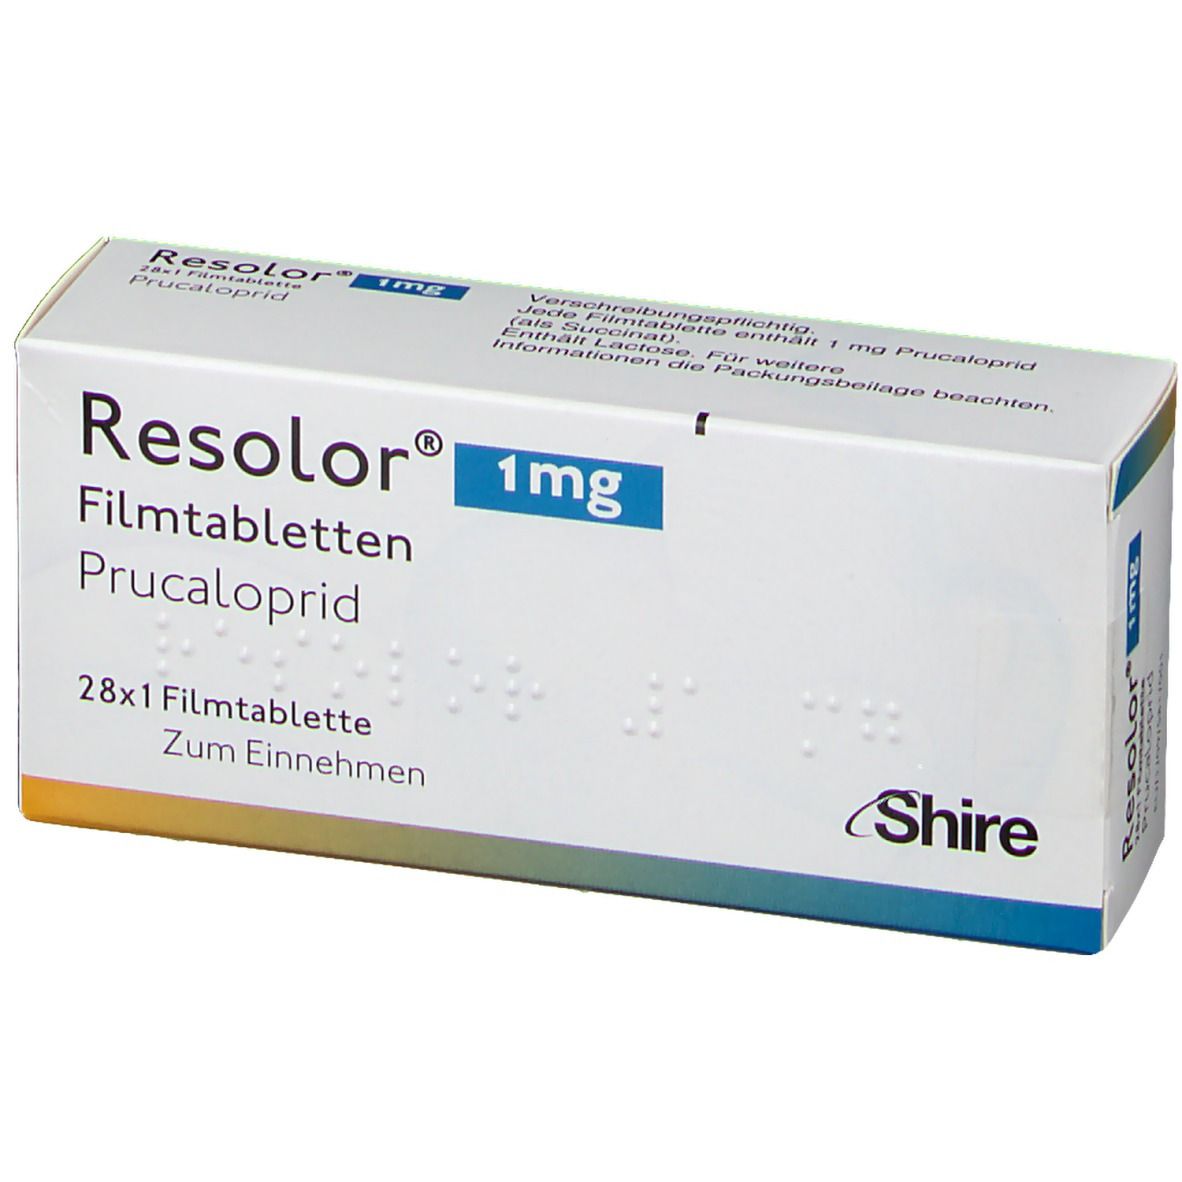 Resolor® 1 mg